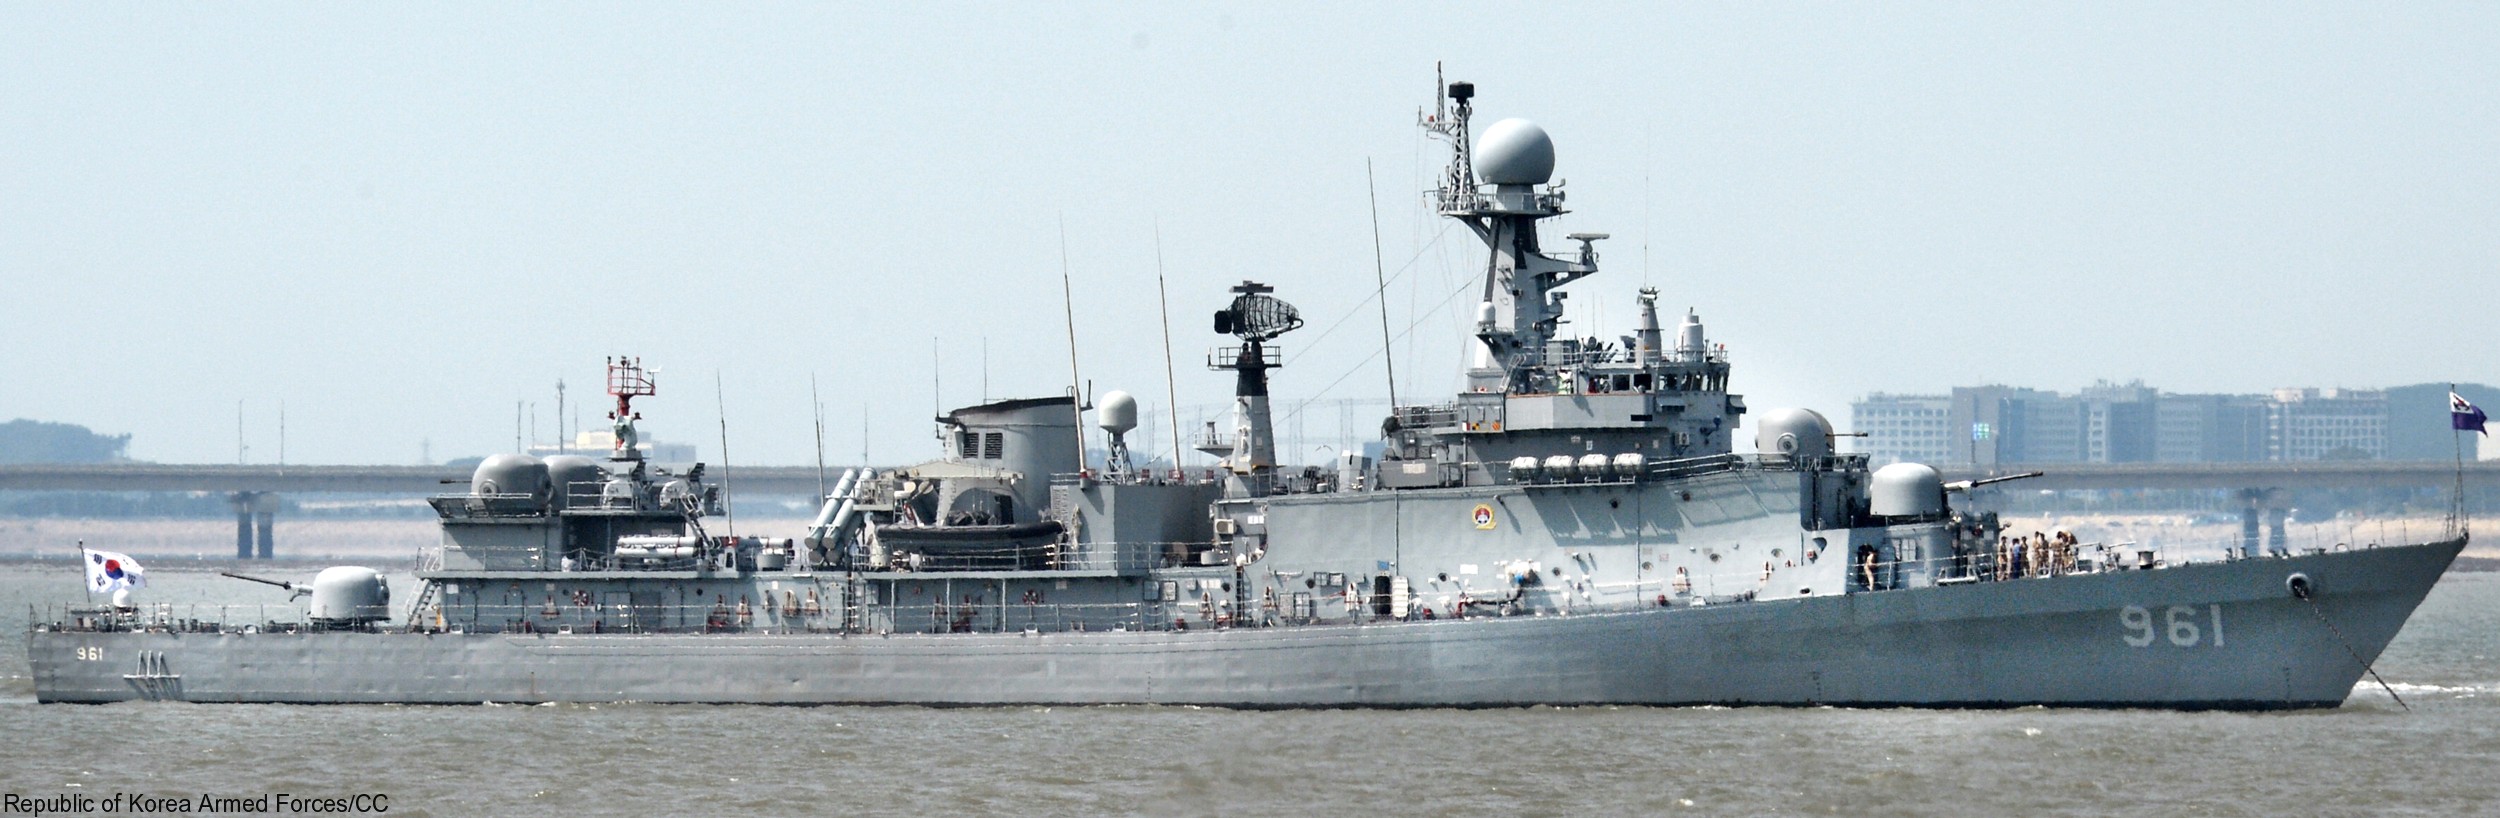 ff-961 roks cheongju ulsan class frigate republic of korea navy rokn 02